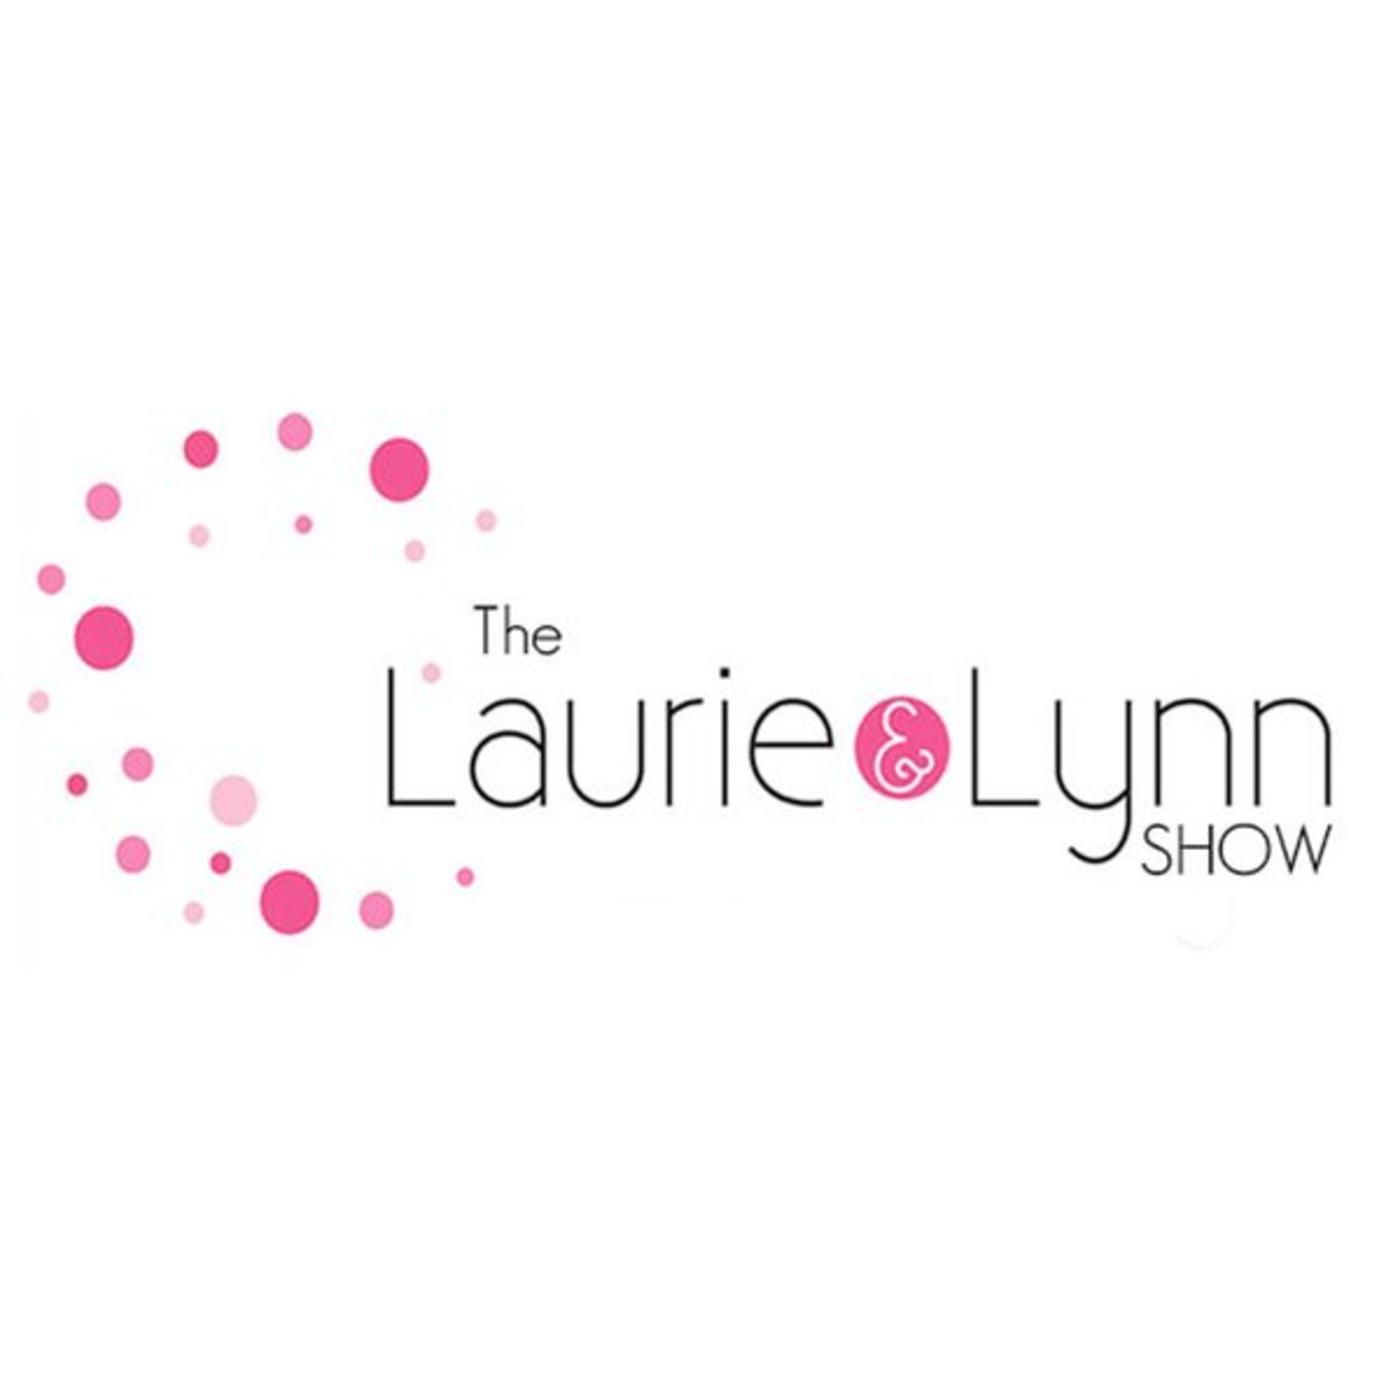 The Laurie & Lynn Show